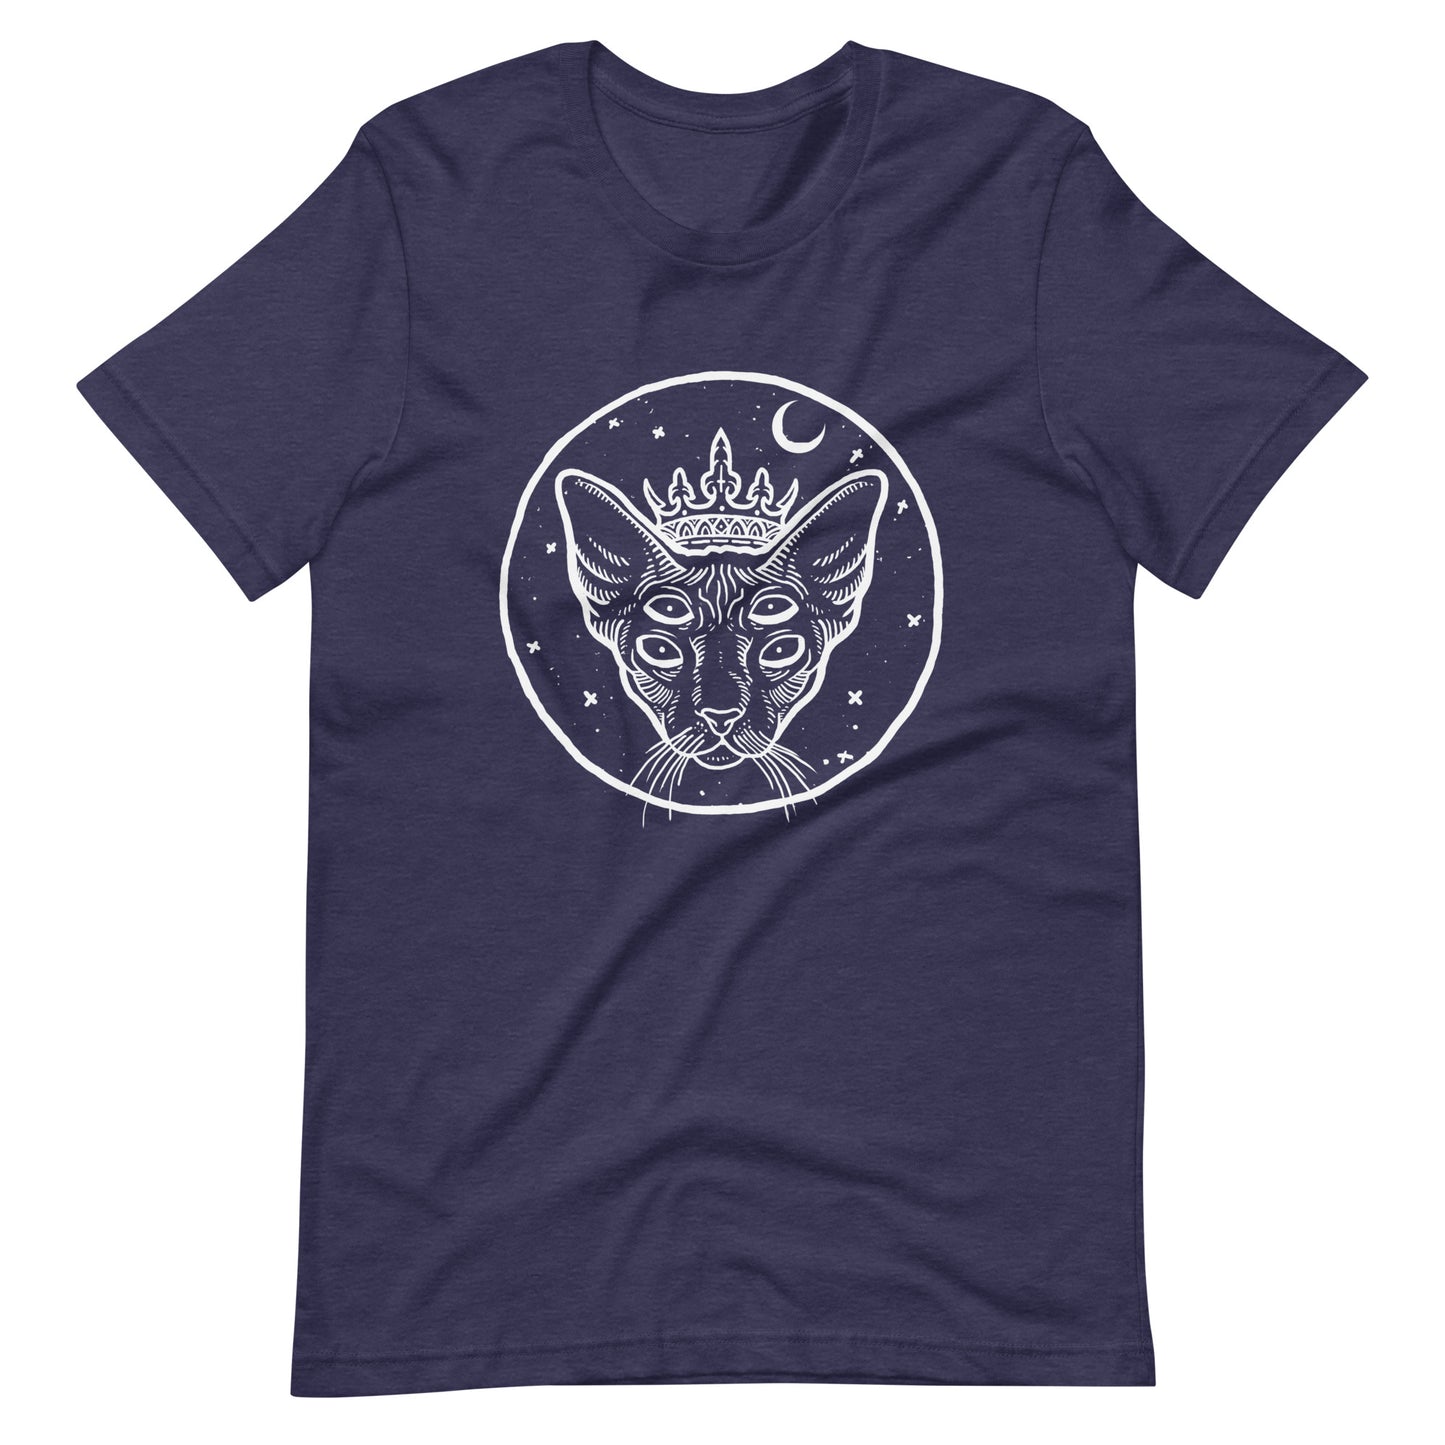 The Ruler - Men's t-shirt - Heather Midnight Navy Front